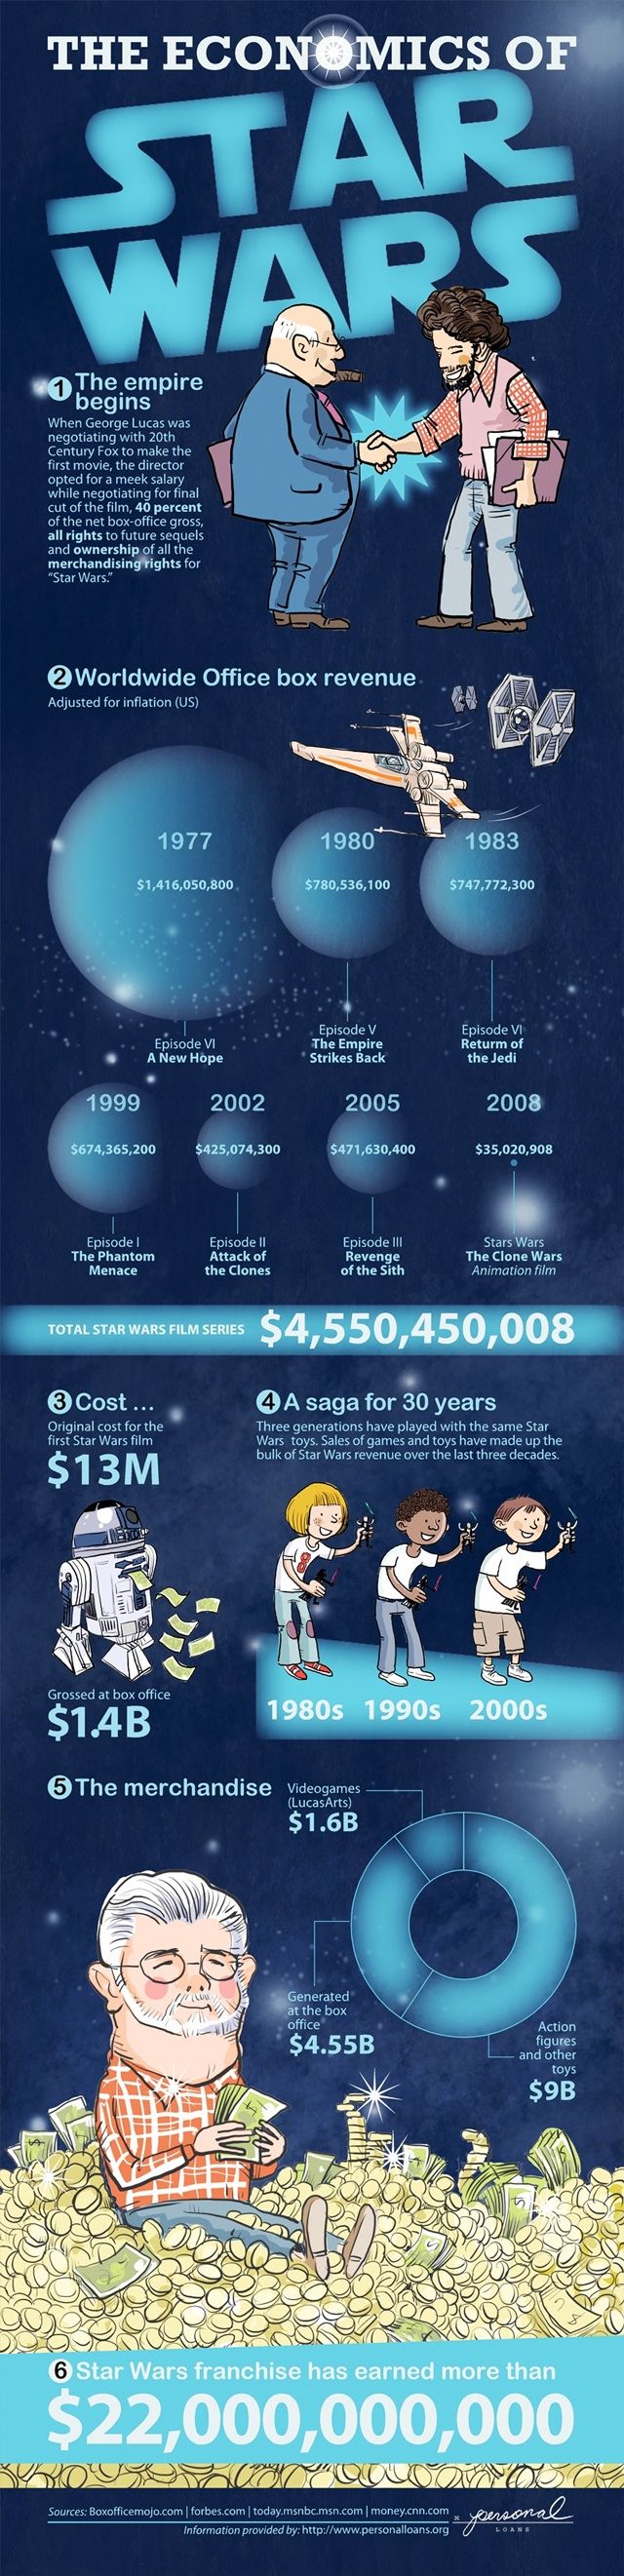 Economics of Star Wars